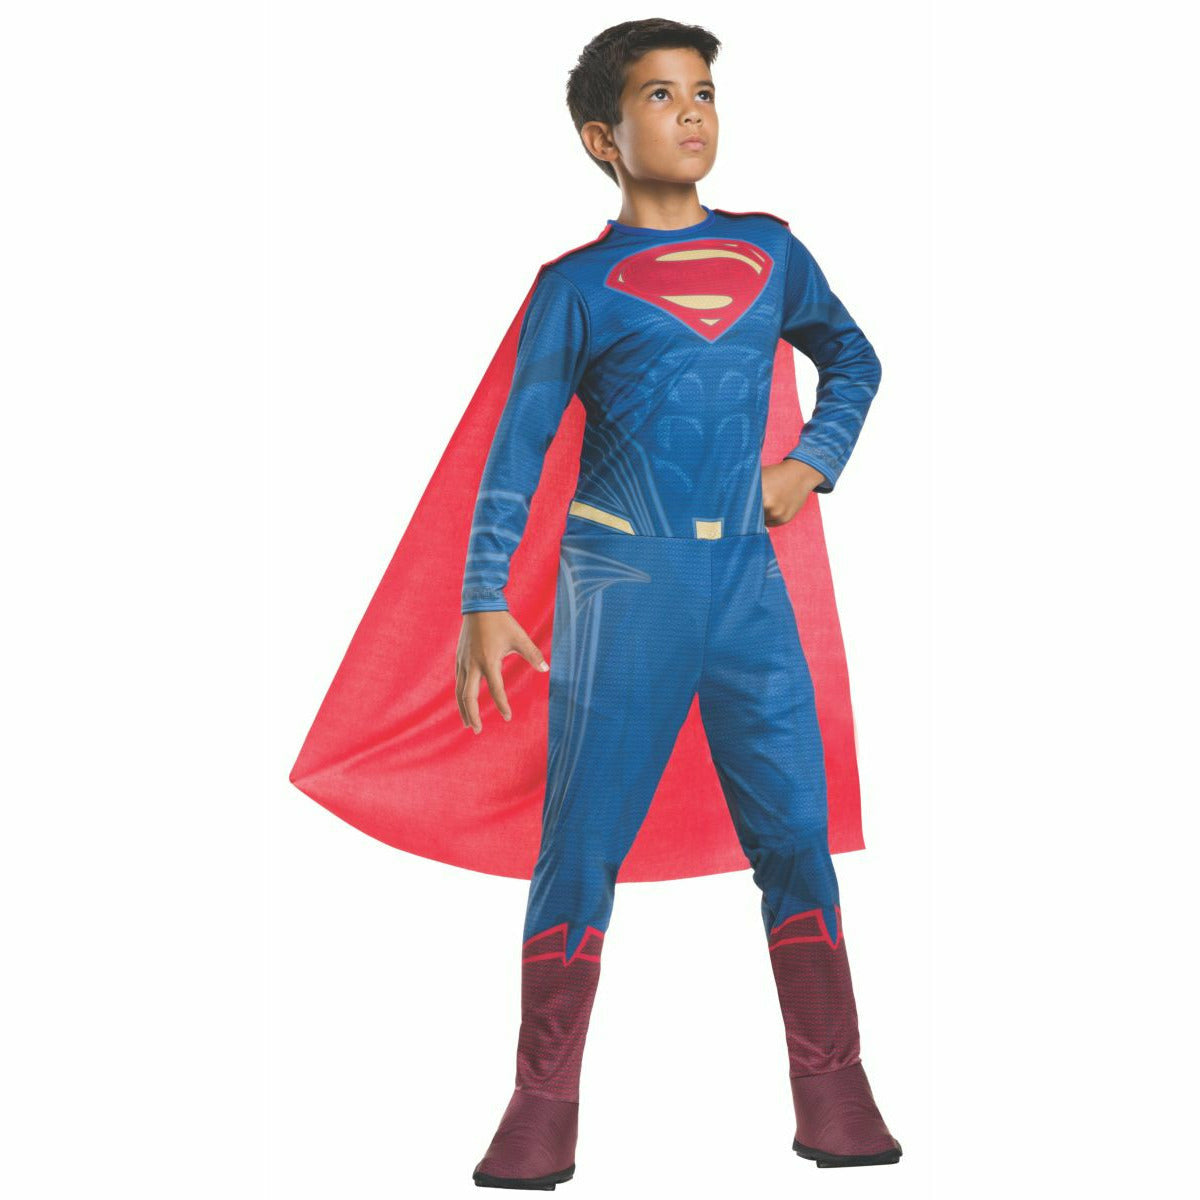 Rubies COSTUMES Boys Superman Costume - Batman v Superman